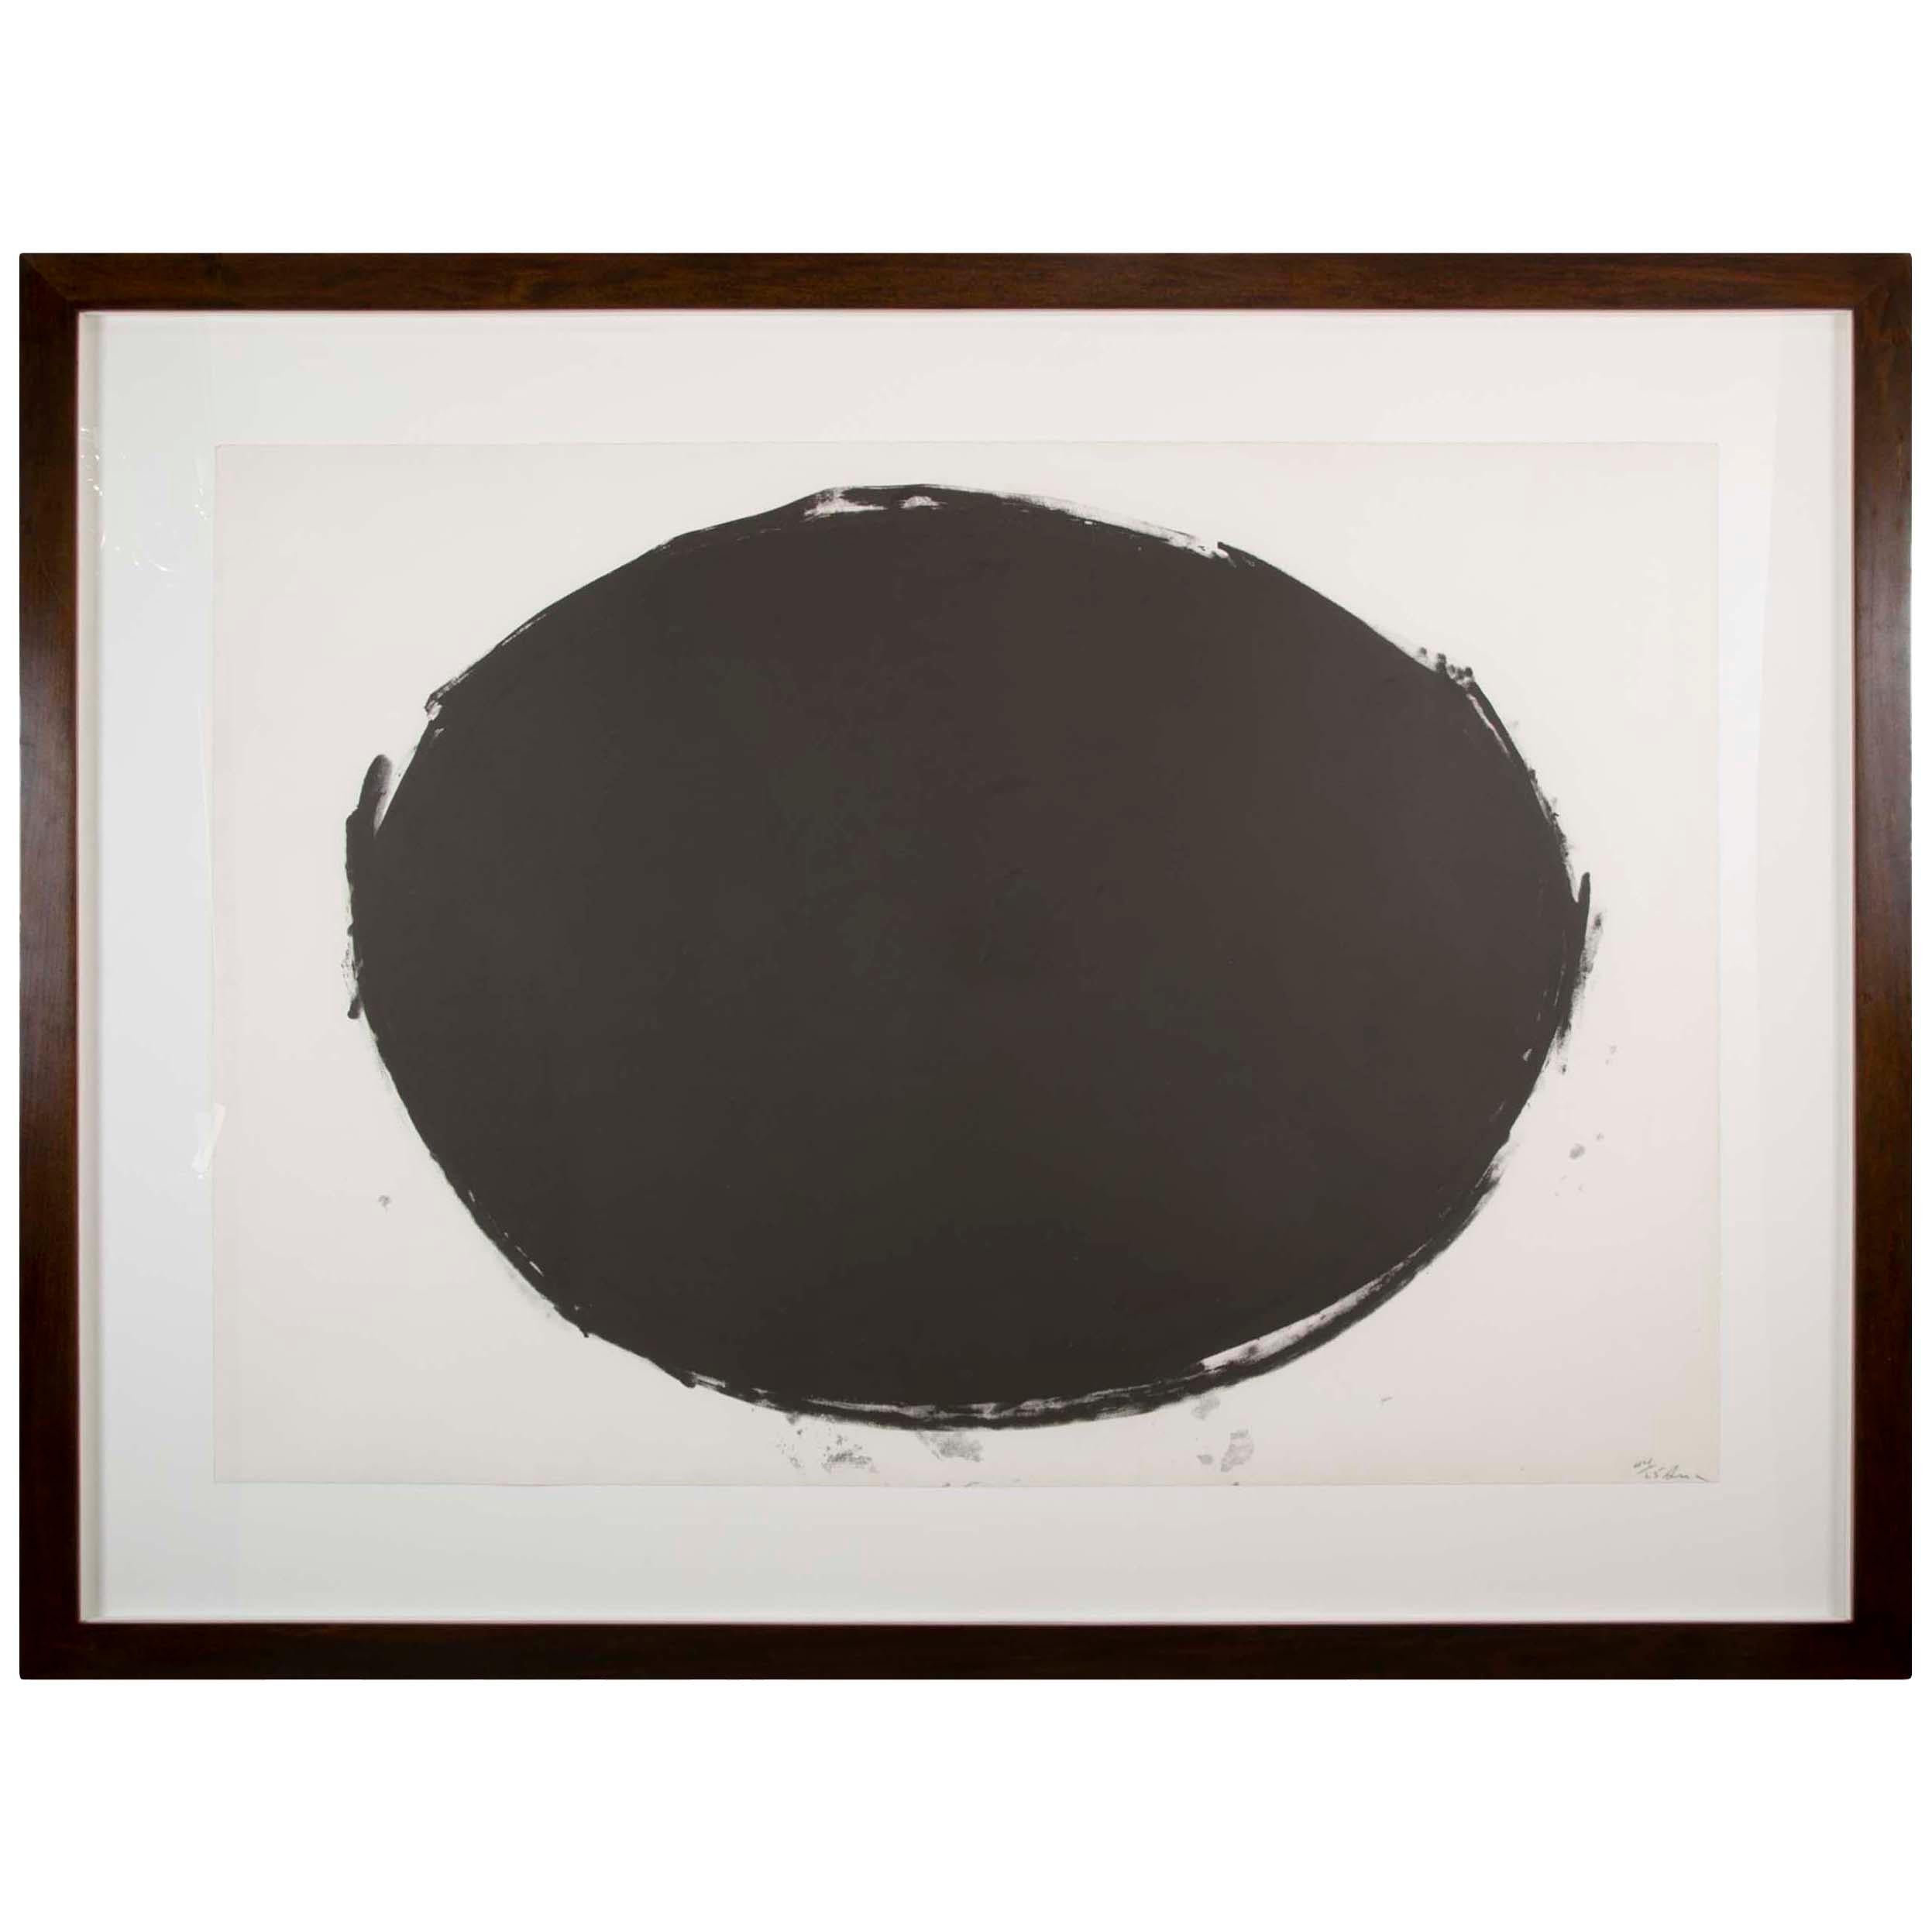 Richard Serra Lithograph Titled "Spoleto Circle"